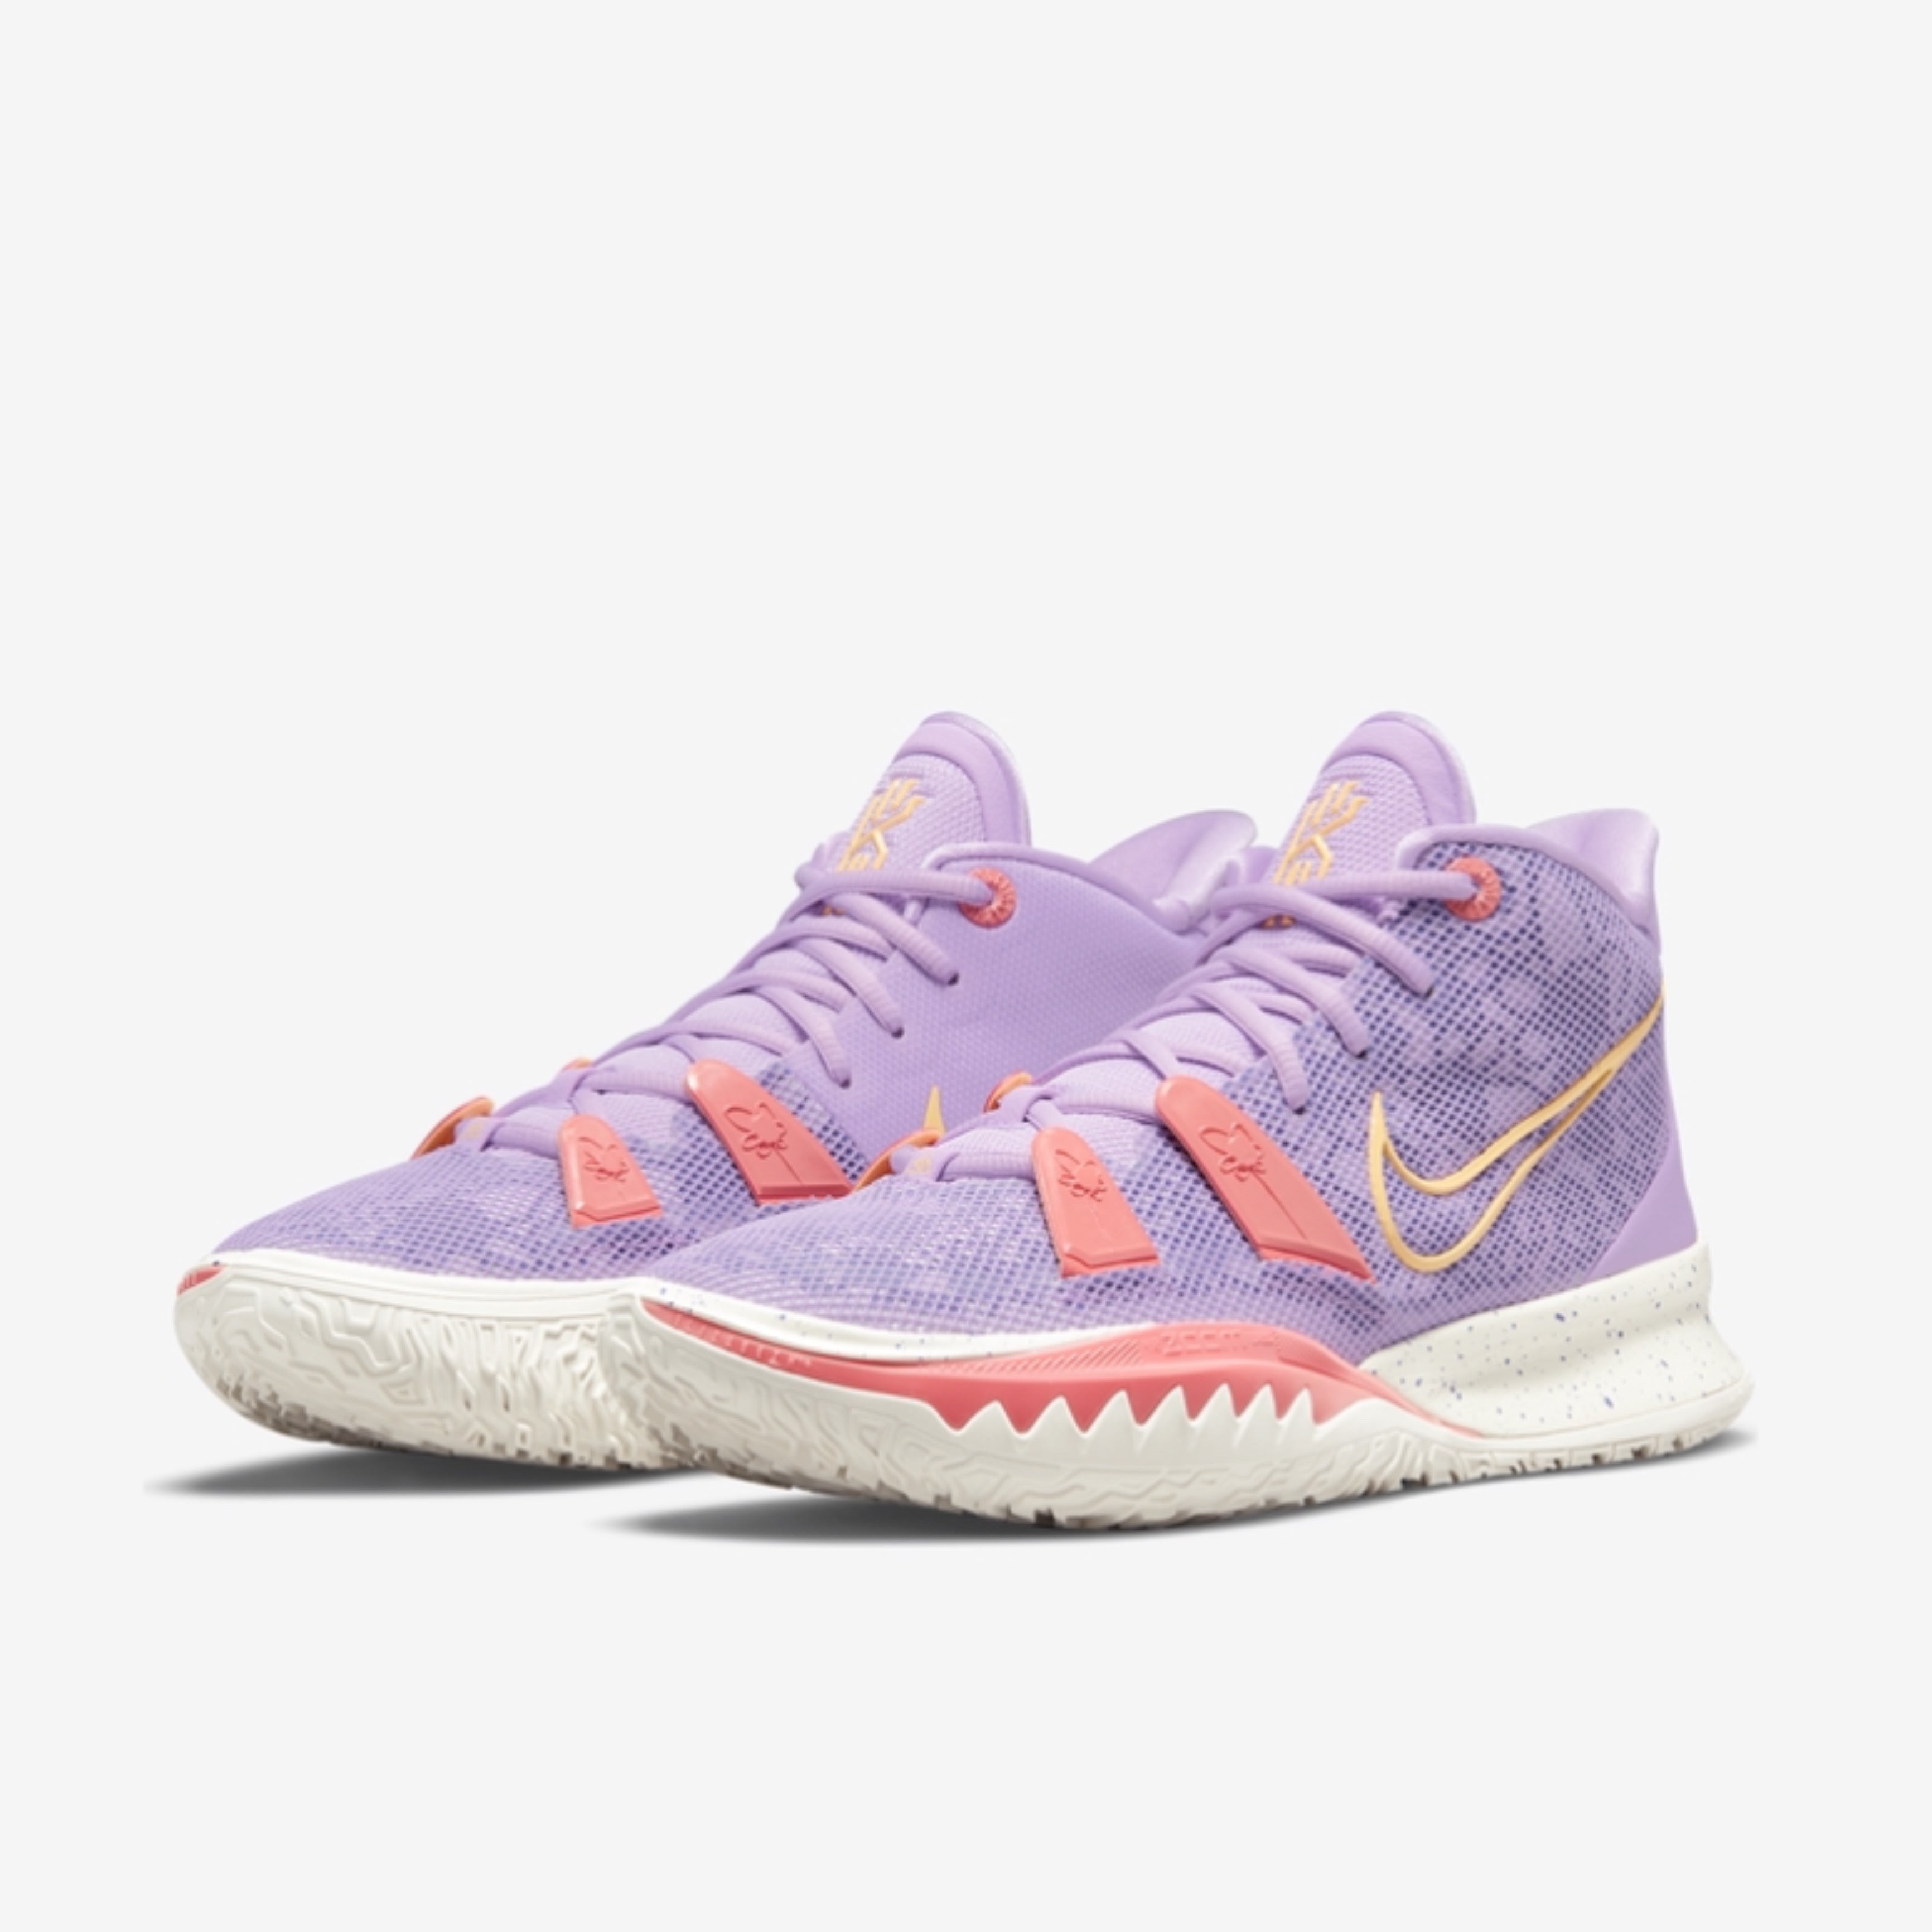 Nike Kyrie 7 purple